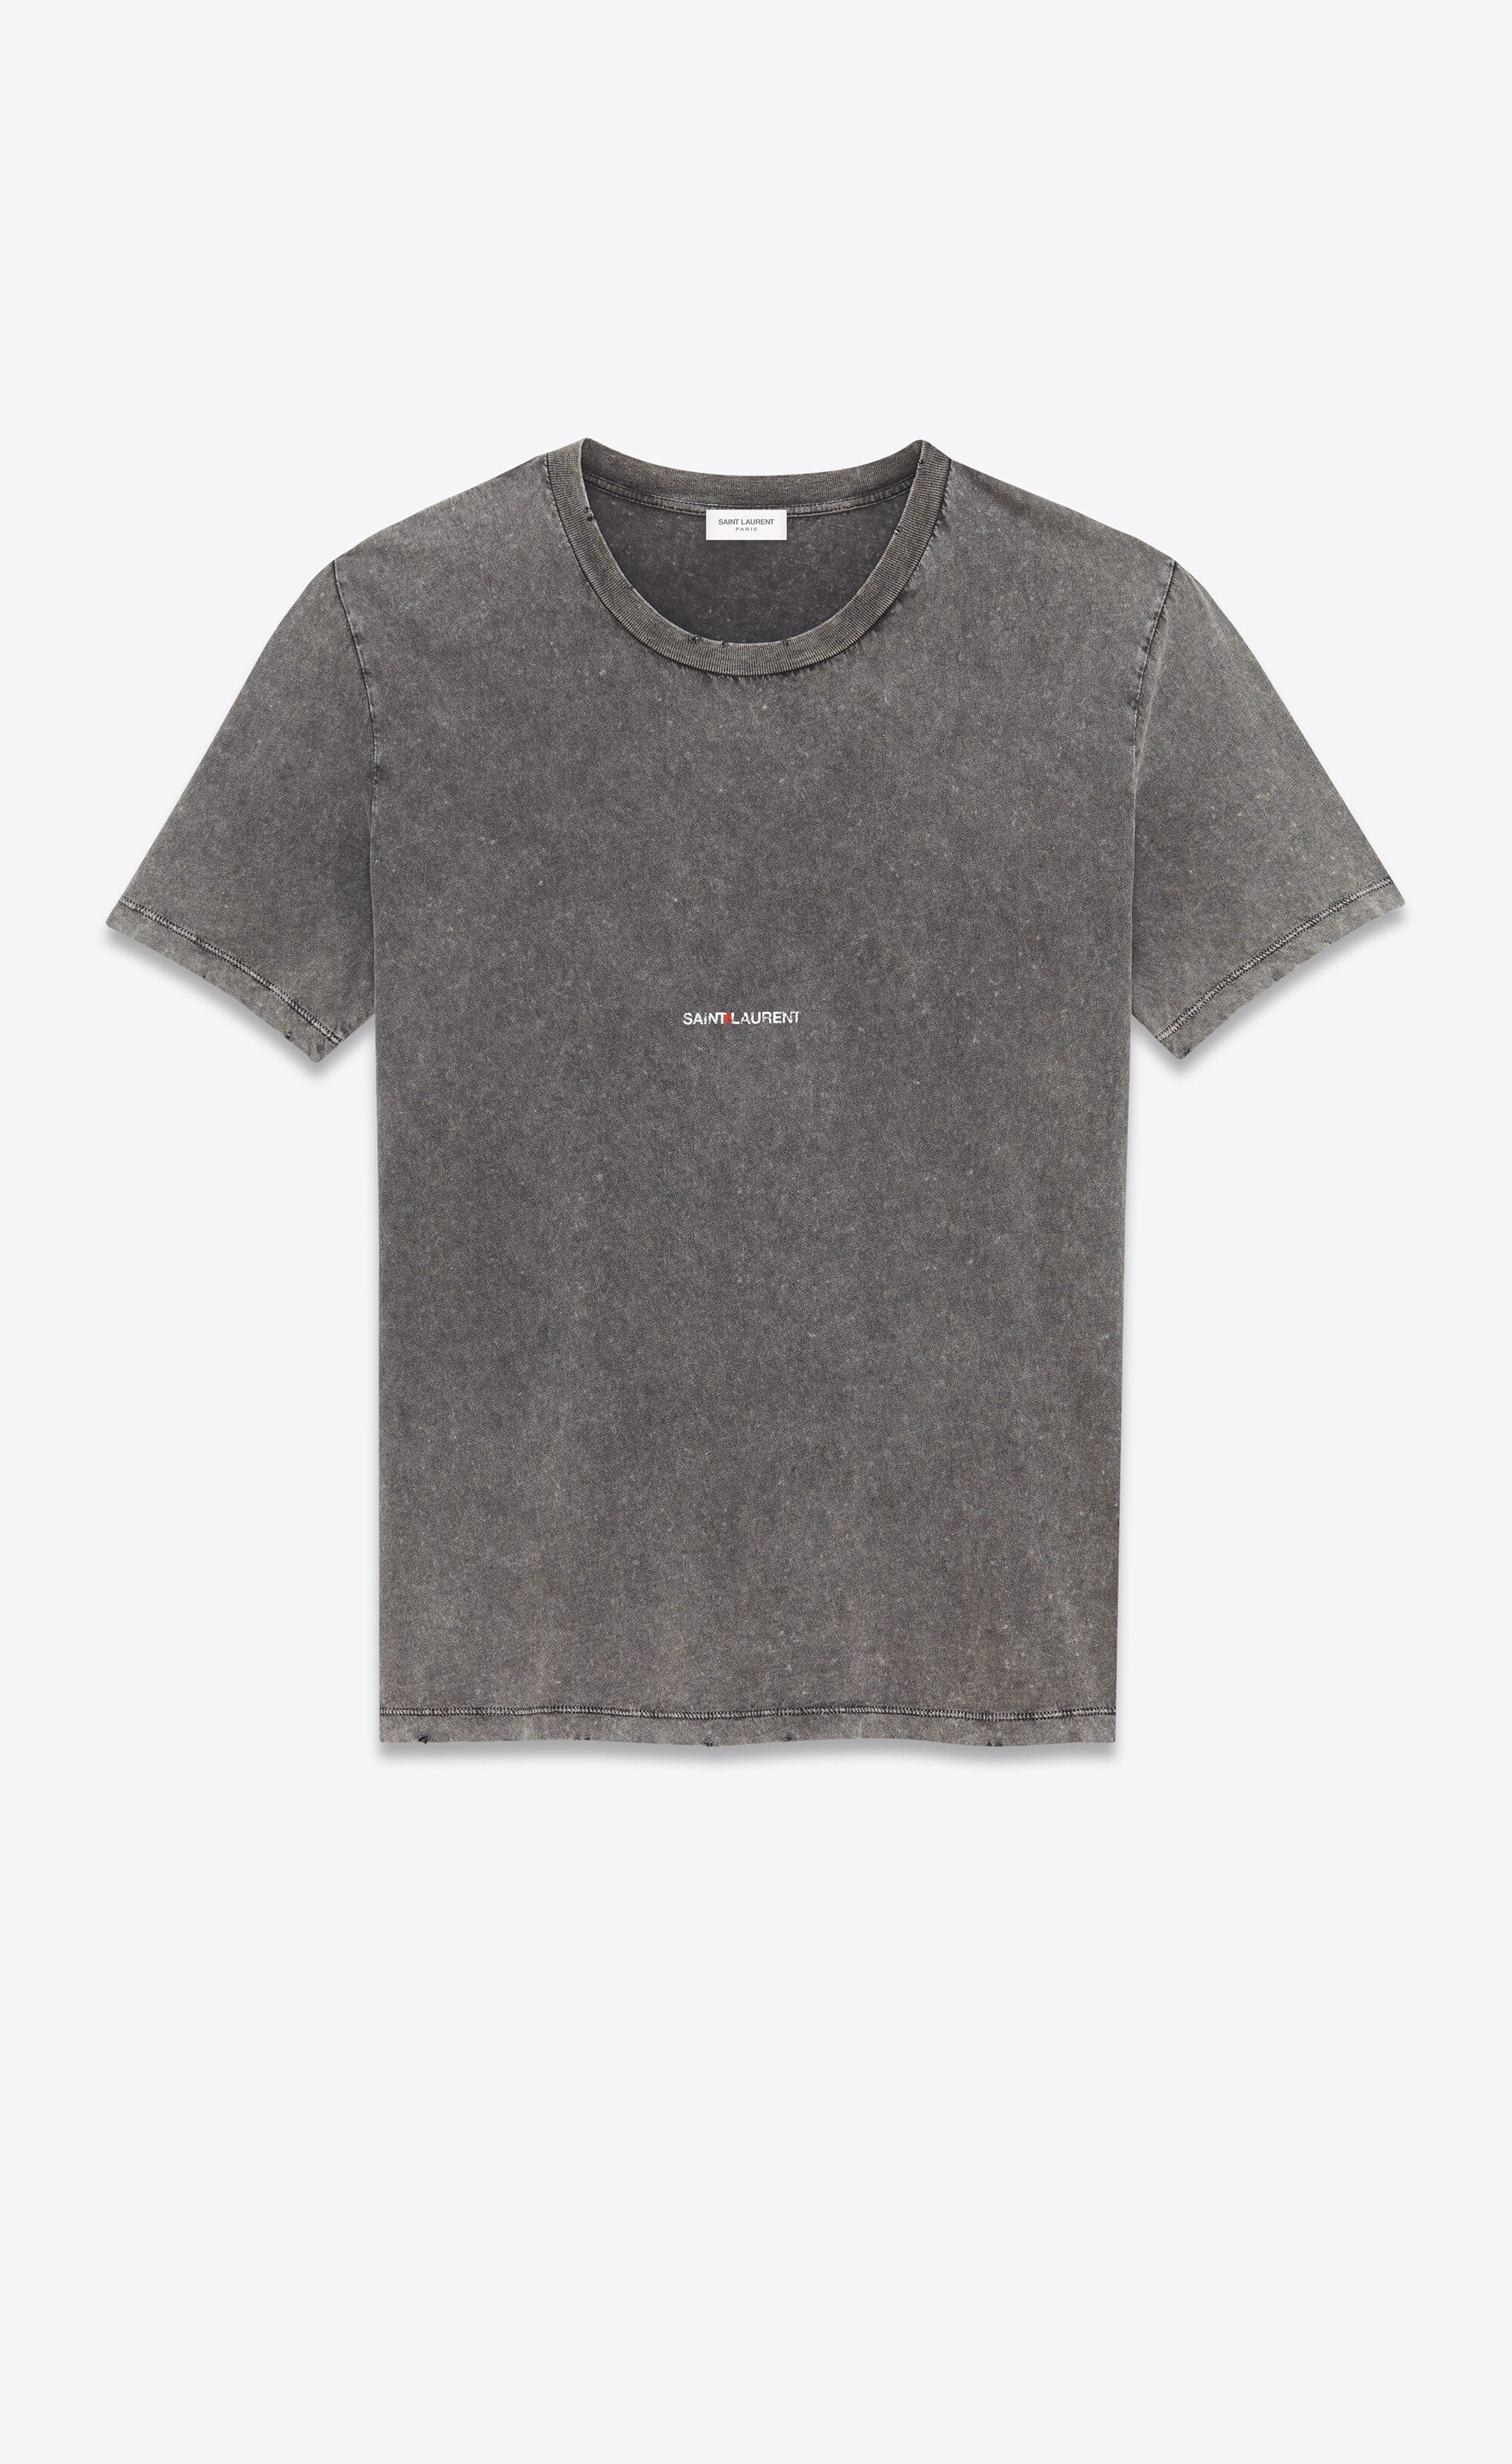 Saint Laurent T Shirt Black Top Sellers, 50% OFF | espirituviajero.com